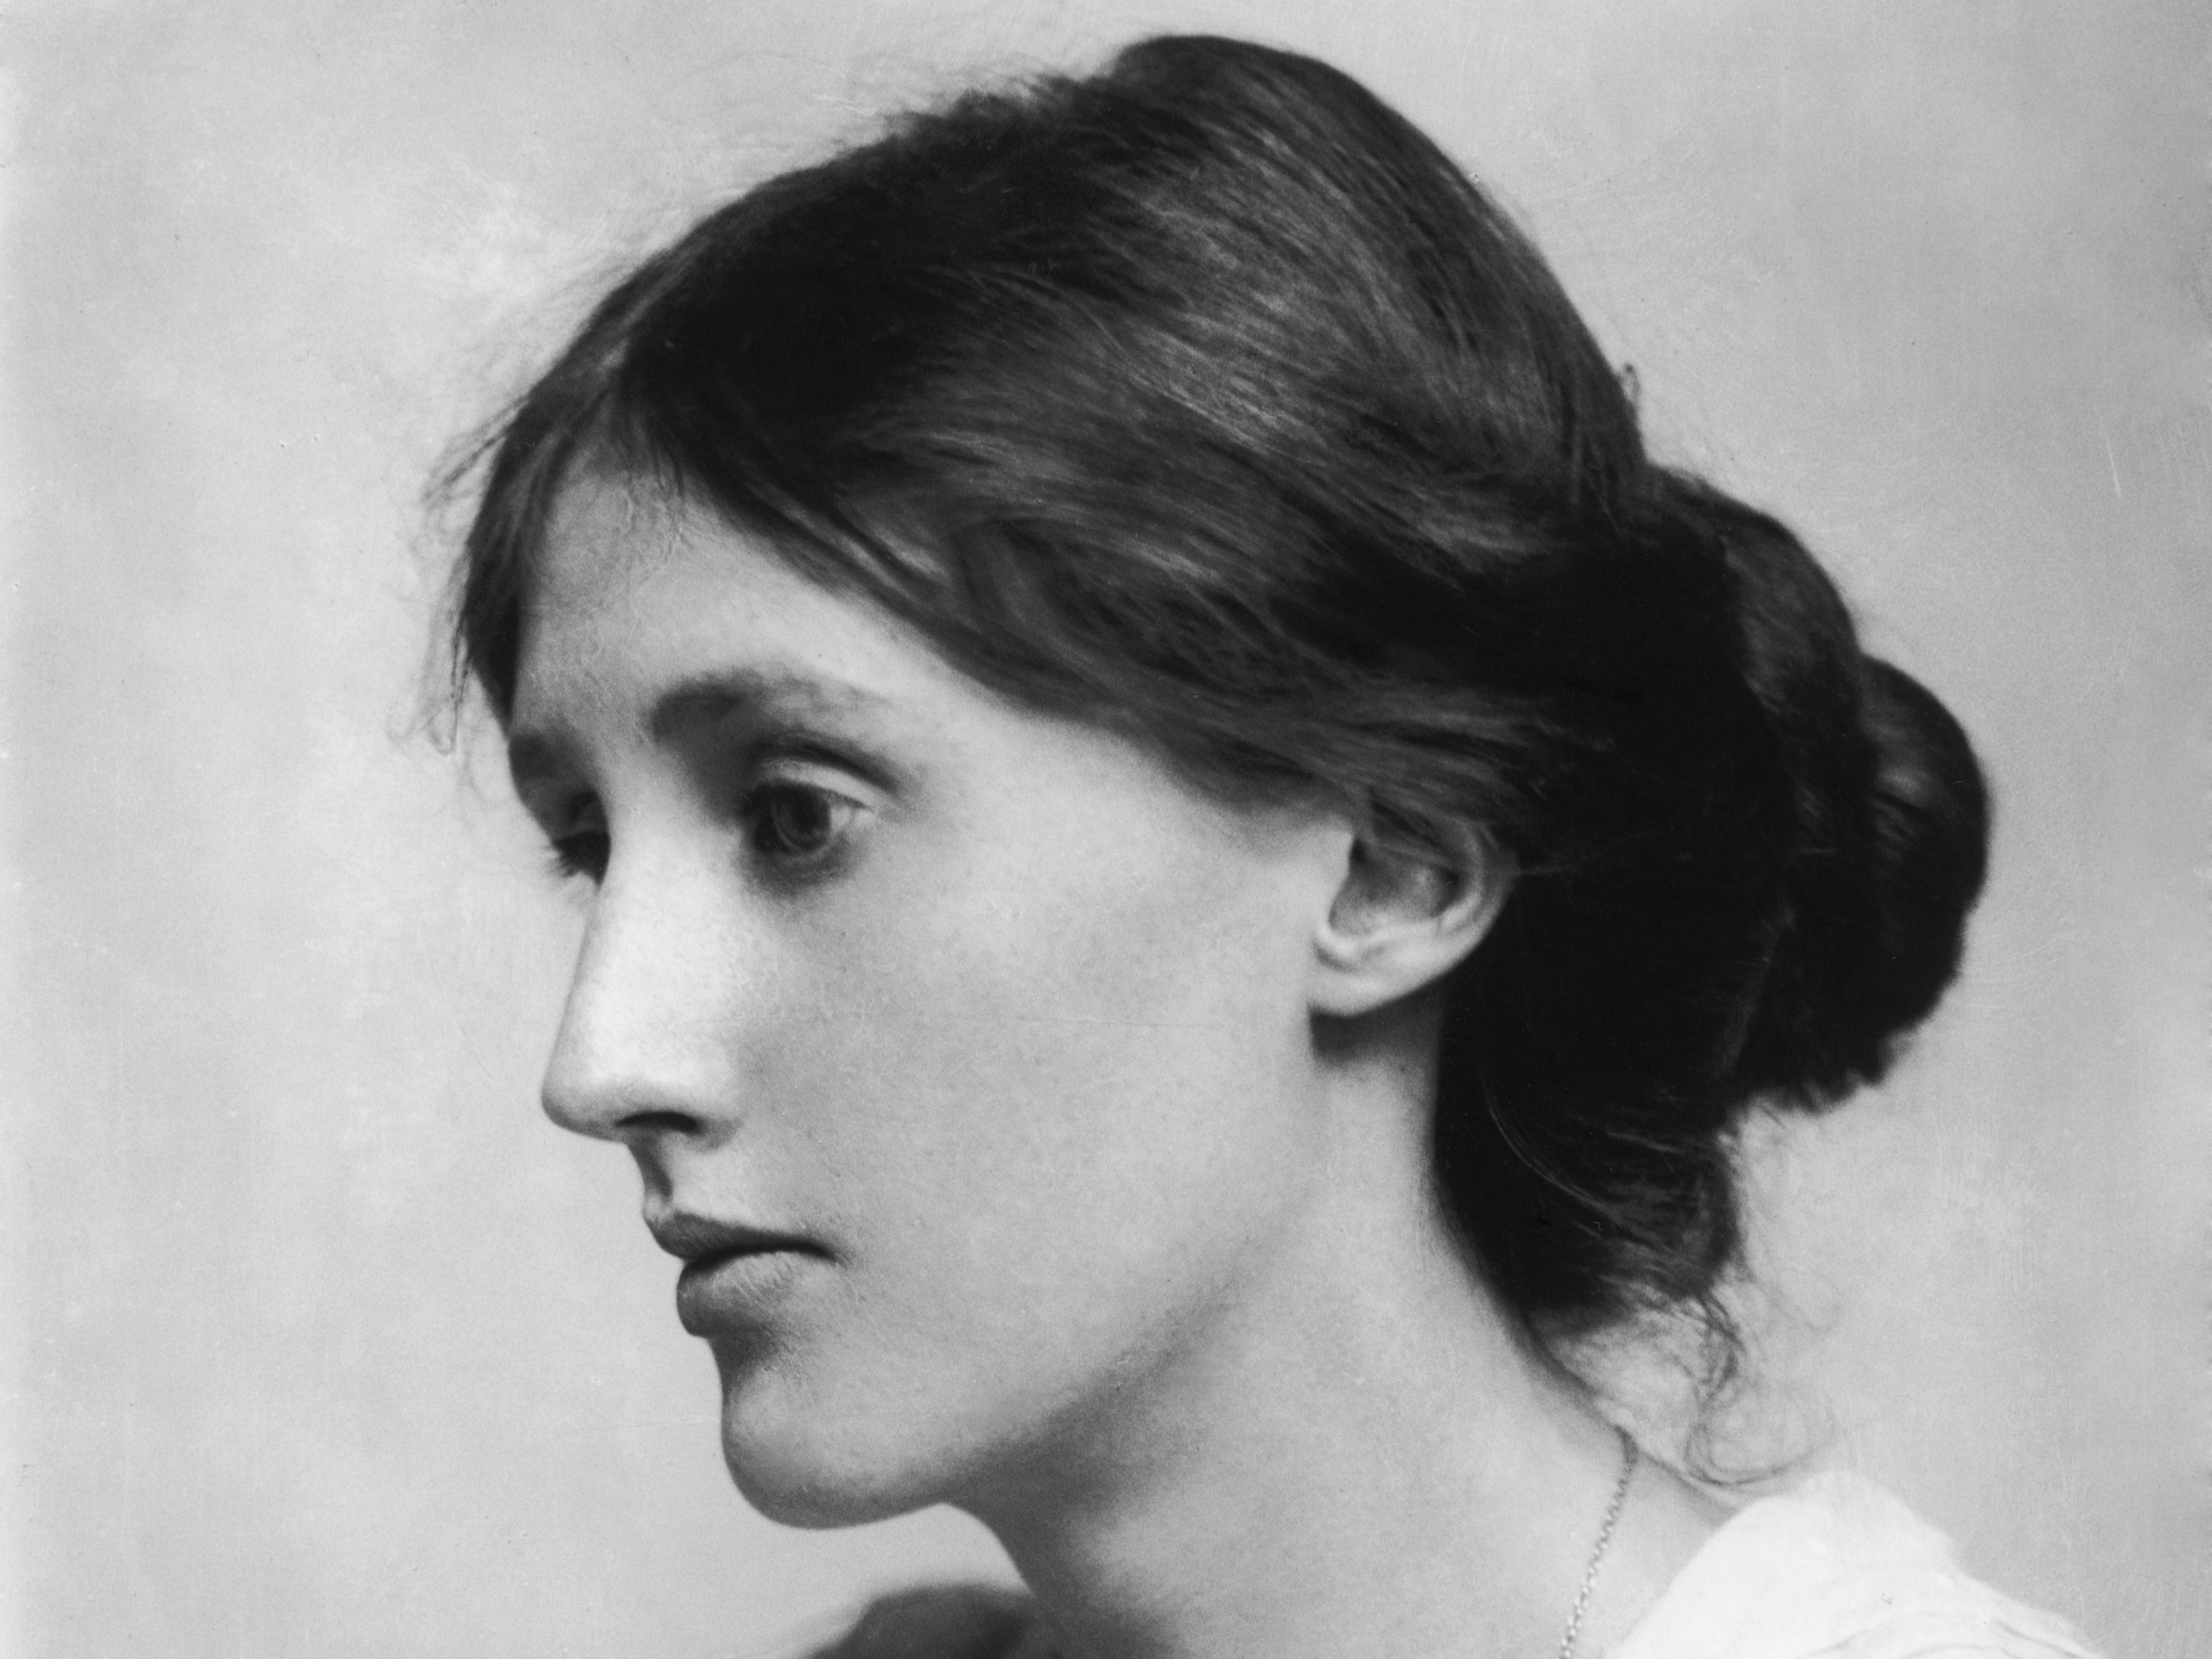 Virginia Woolf called ‘The Waves’ her ‘play-poem’